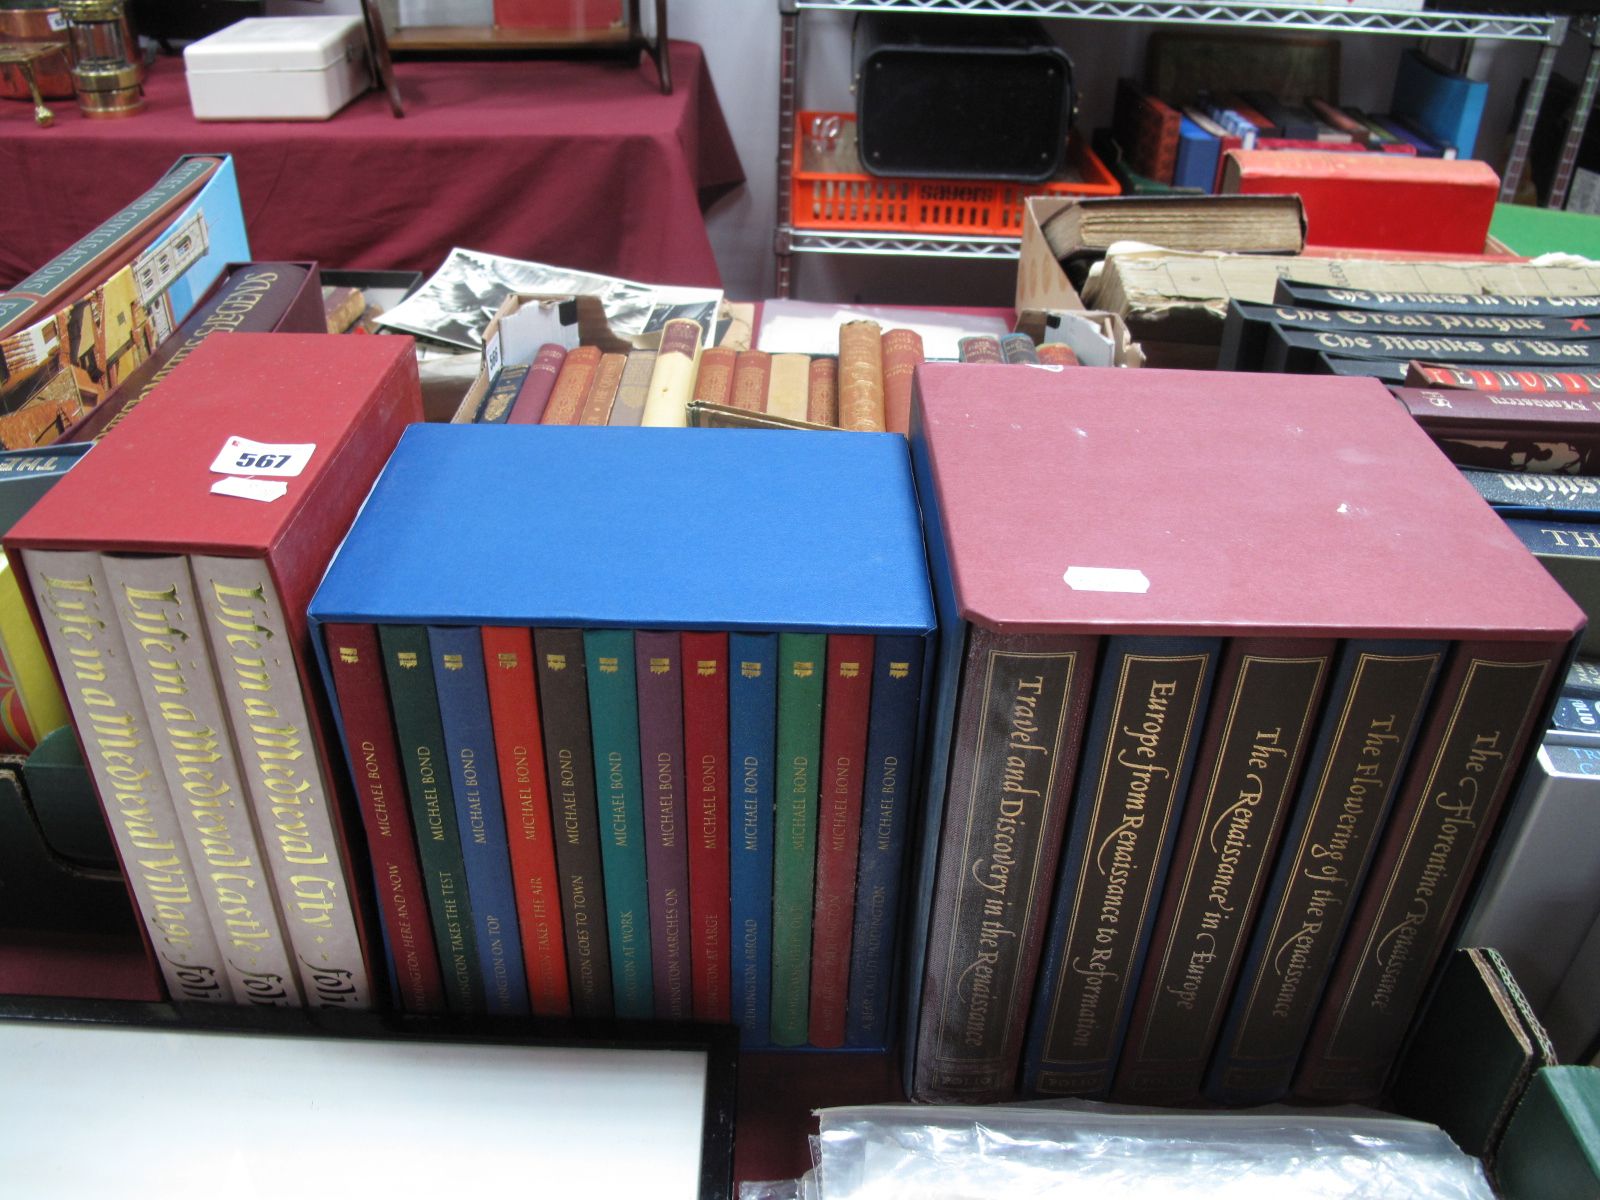 Folio Society Boxed Sets, Paddington (12), The Story of the Renaissance (5), Scenes of Medieval